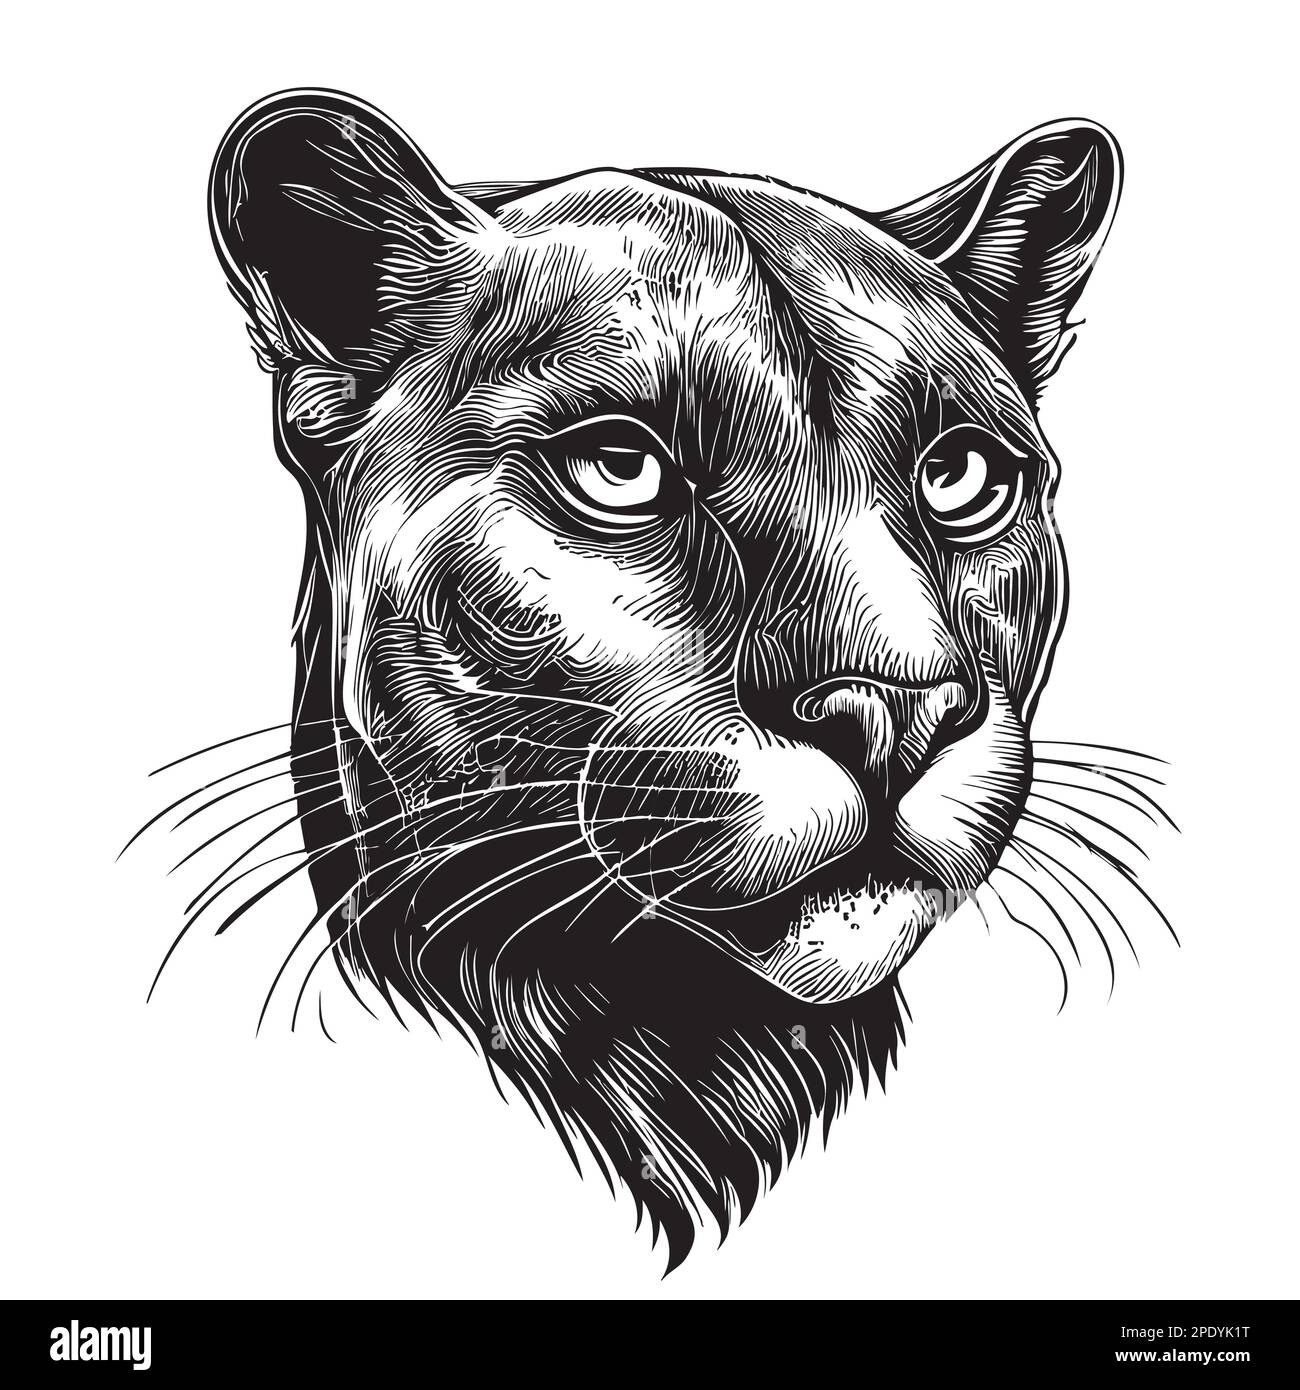 Black panther portrait hand drawn sketch illustration, Wild ...